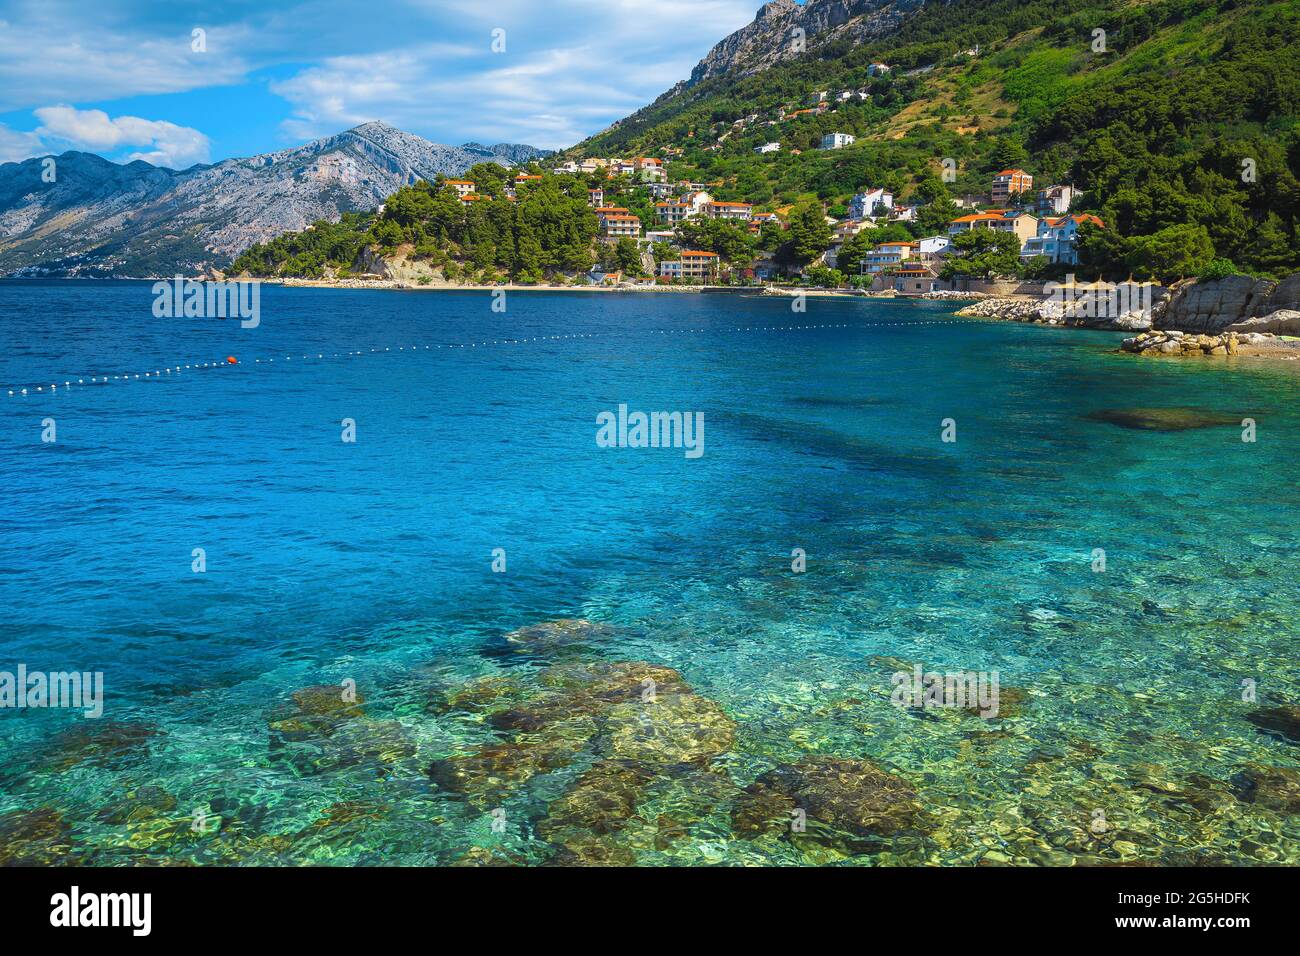 Wonderful seashore and picturesque places with mediterranean houses on the waterfront, Brela, Dalmatia, Croatia, Europe Stock Photo